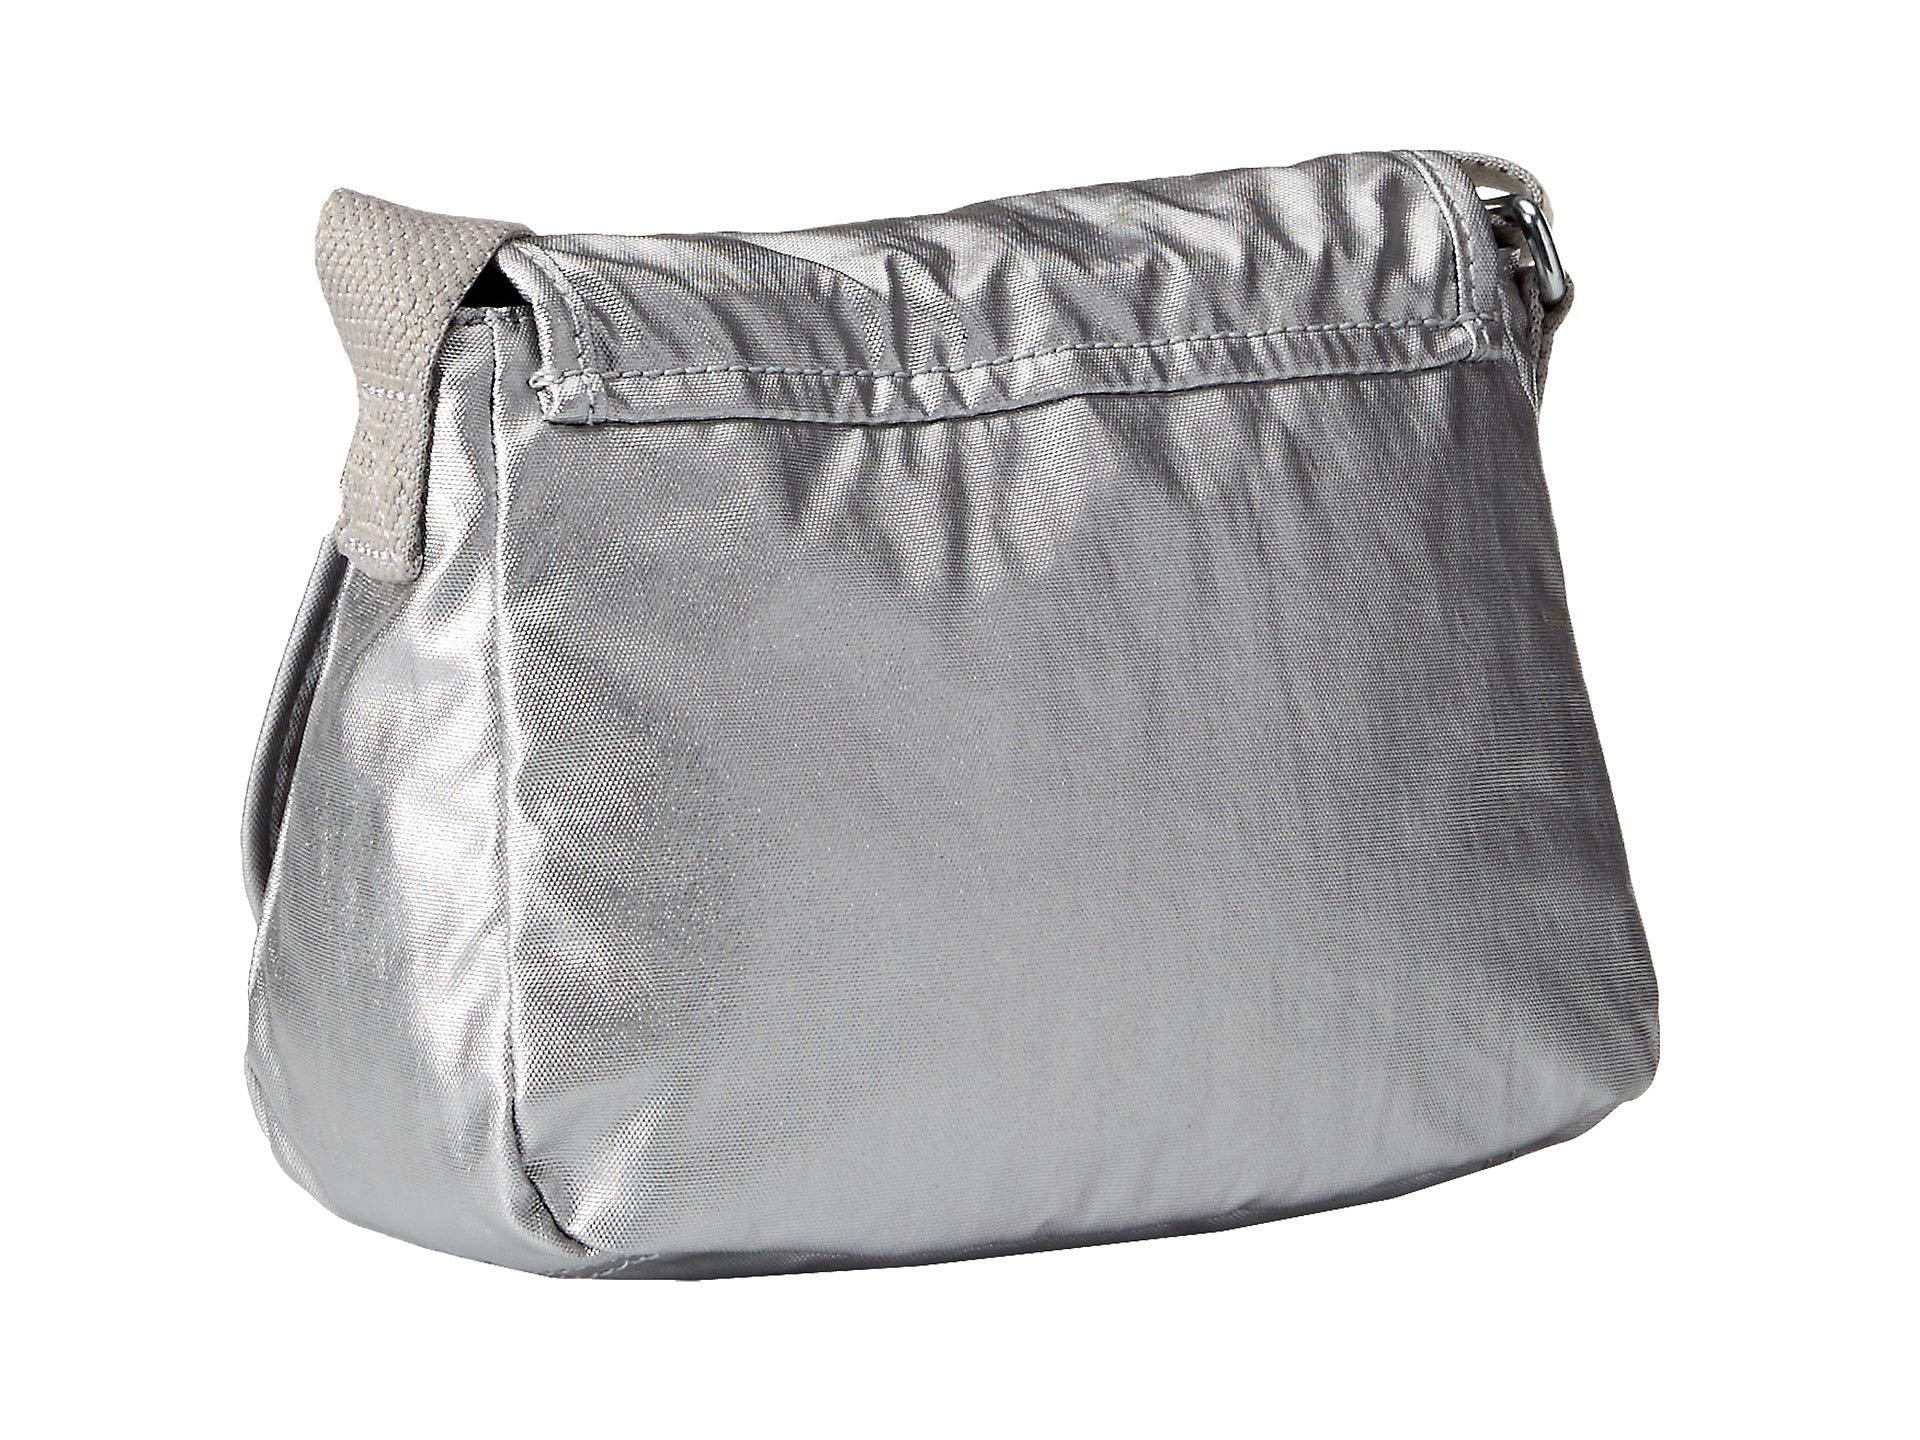 Kipling Sabian Cross Body Mini Bag in Metallic | Lyst